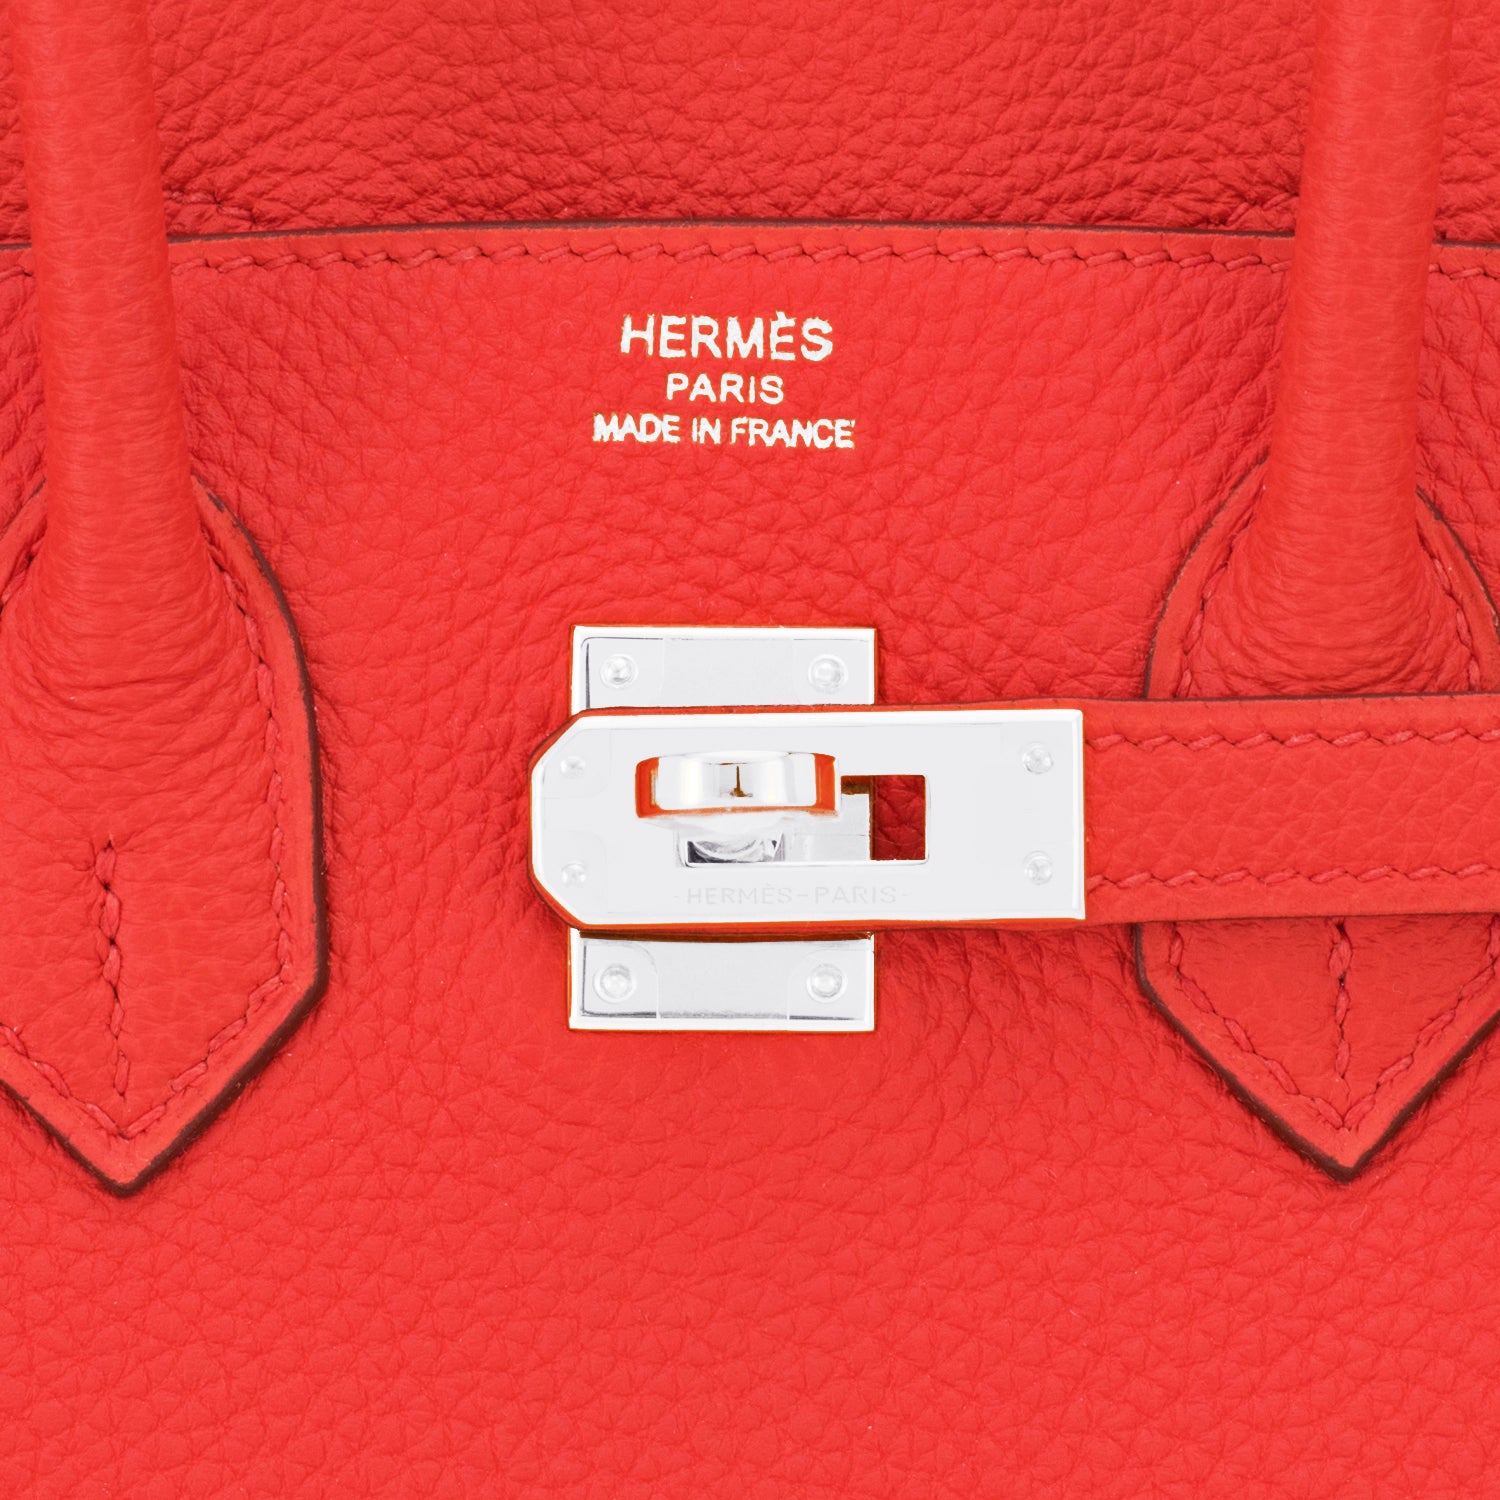 Hermes Birkin Handbag Capucine Togo with Palladium Hardware 30 Orange